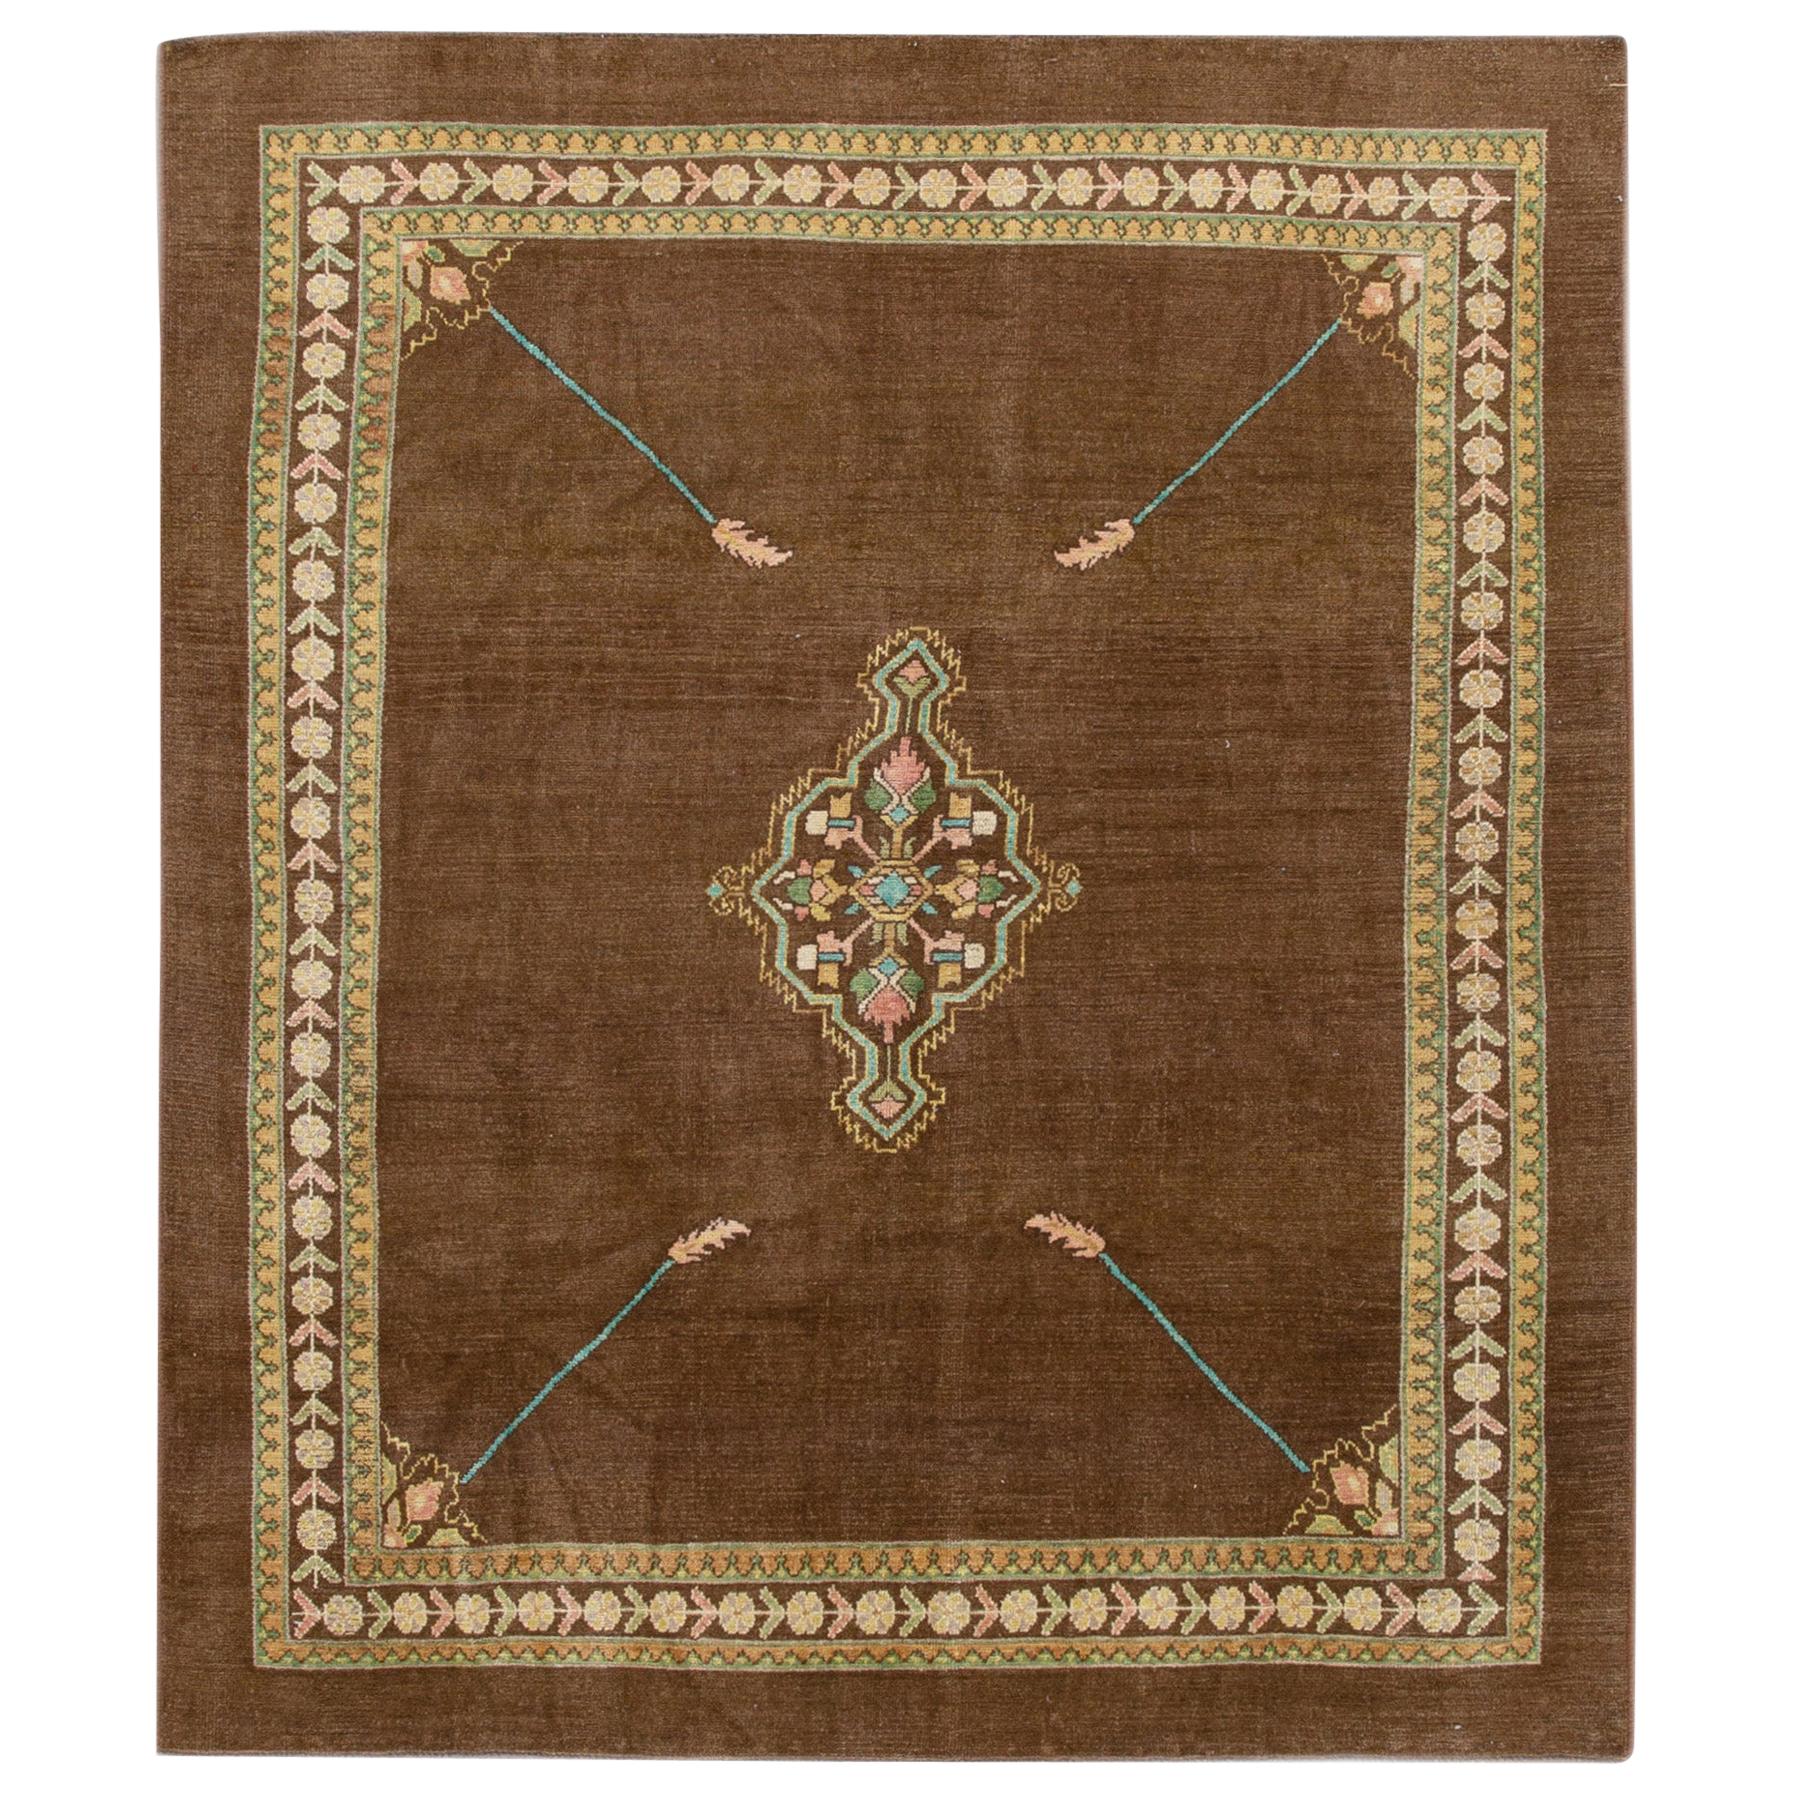 Brauner handgefertigter Medaillon-Teppich aus geblümter Wolle, Modern Revival